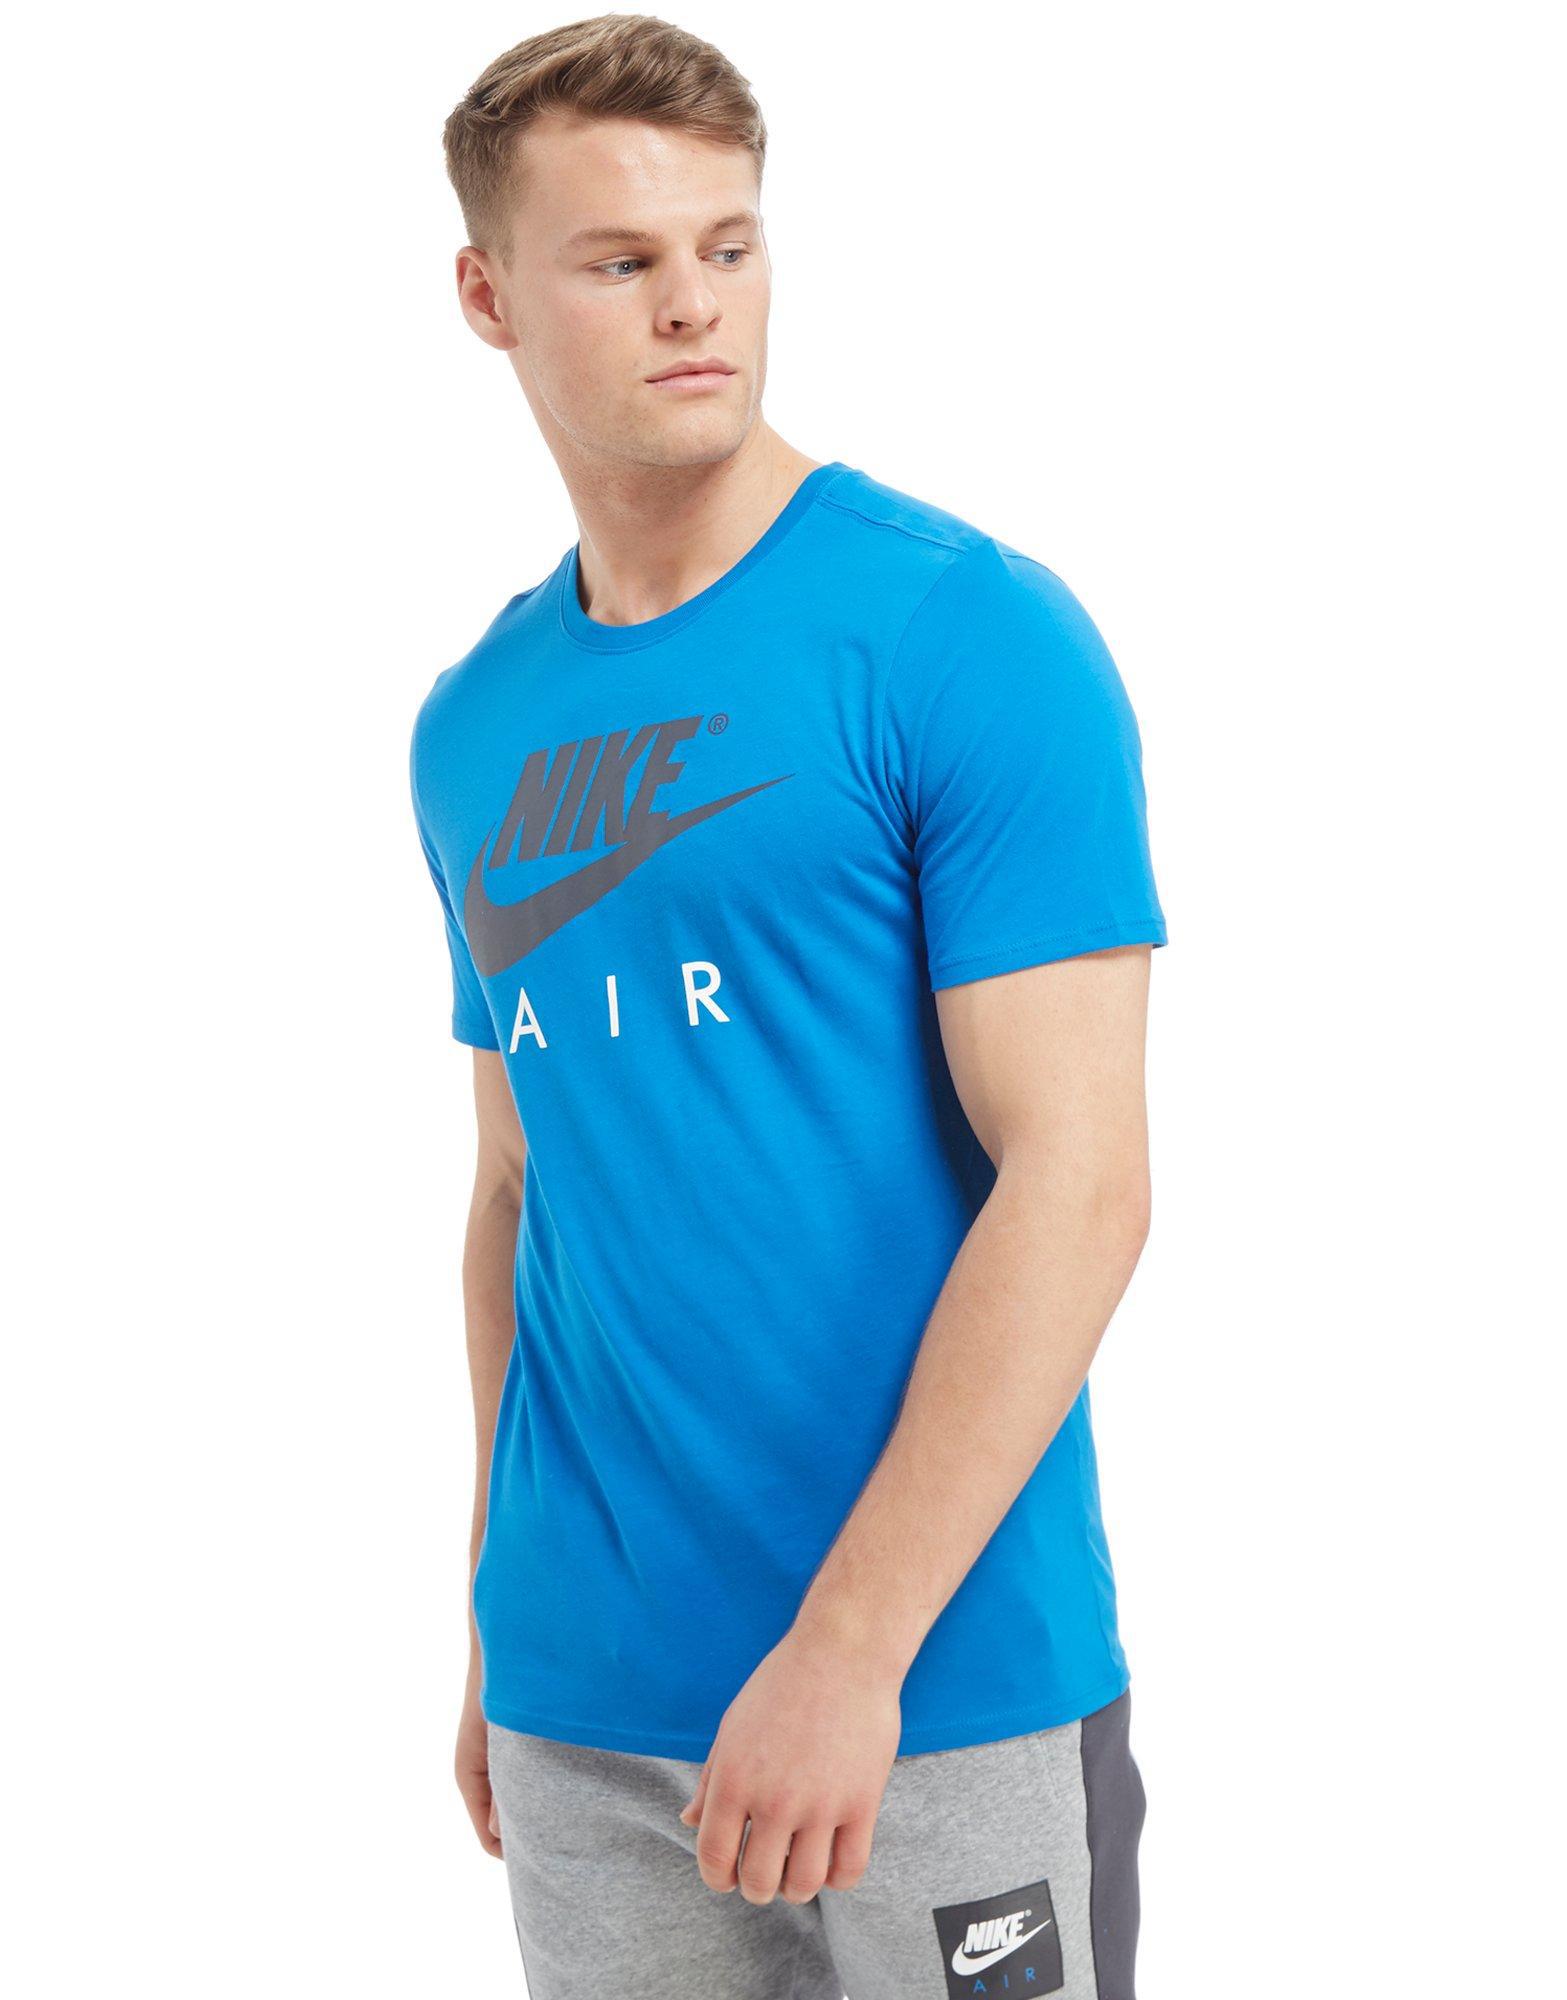 Nike Air T Shirt Blue | vlr.eng.br